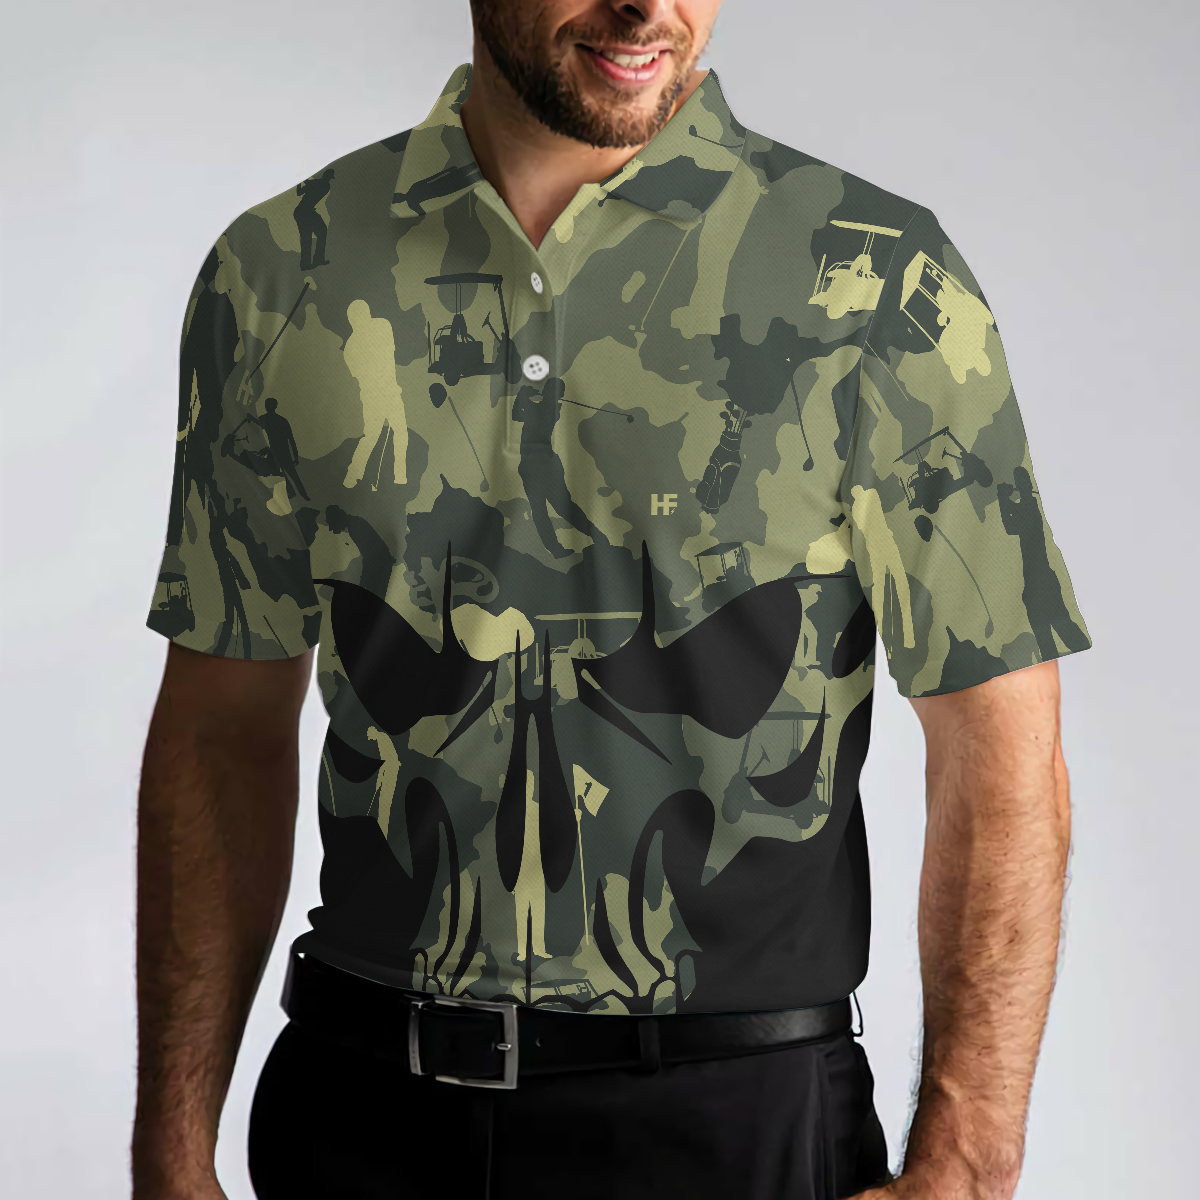 Make Par Not War Polo Shirt Camouflage Pattern Golf Shirt For Veterans Golf Gift Idea For Military Dad - 5